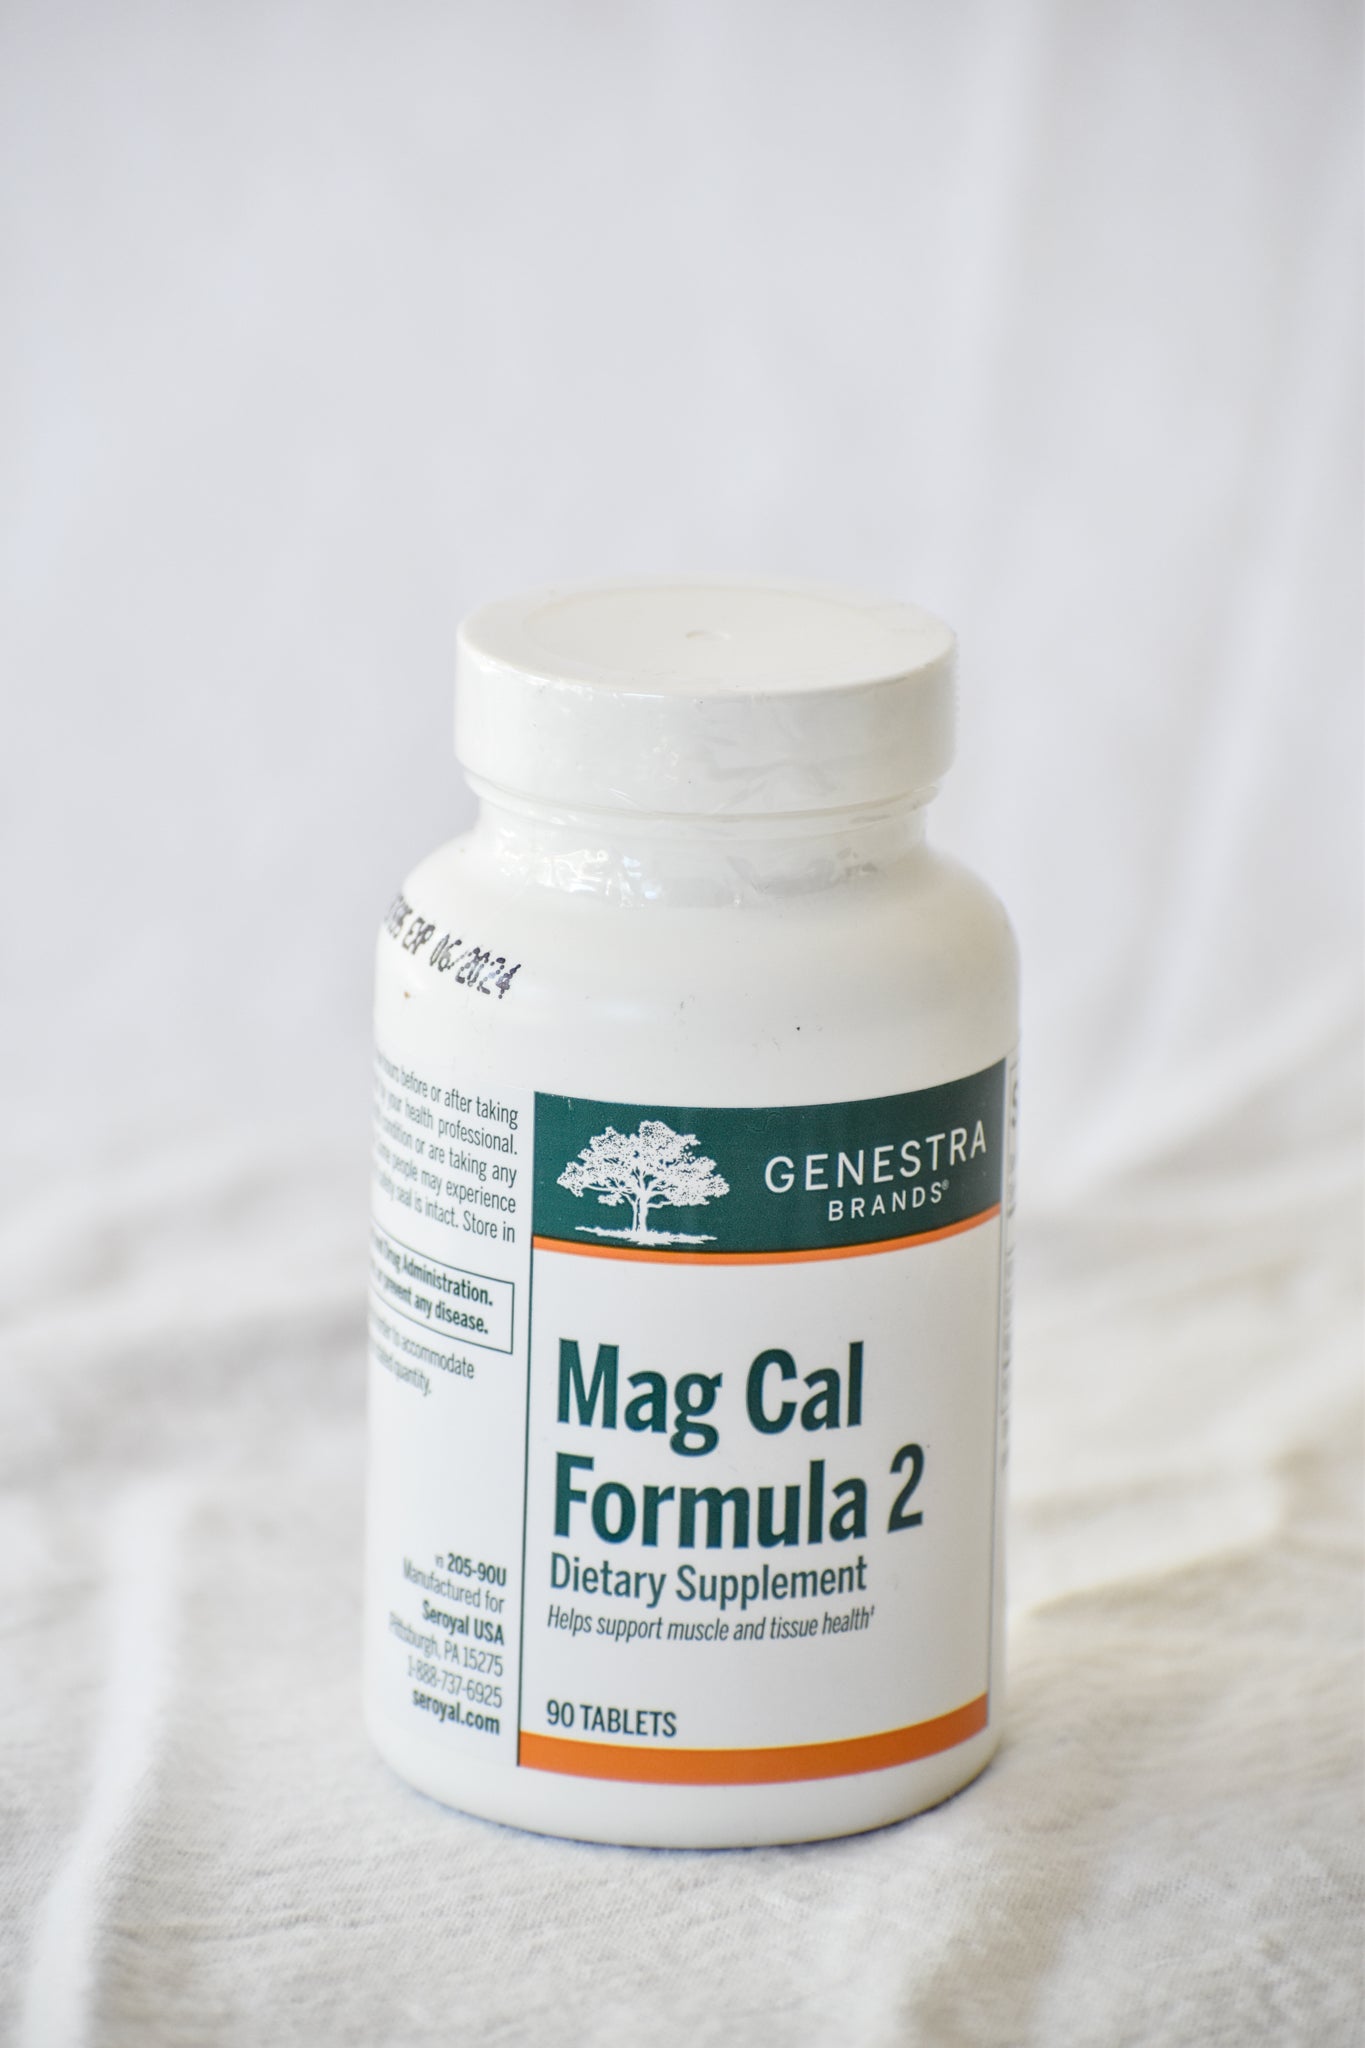 Mag Cal Formula 2